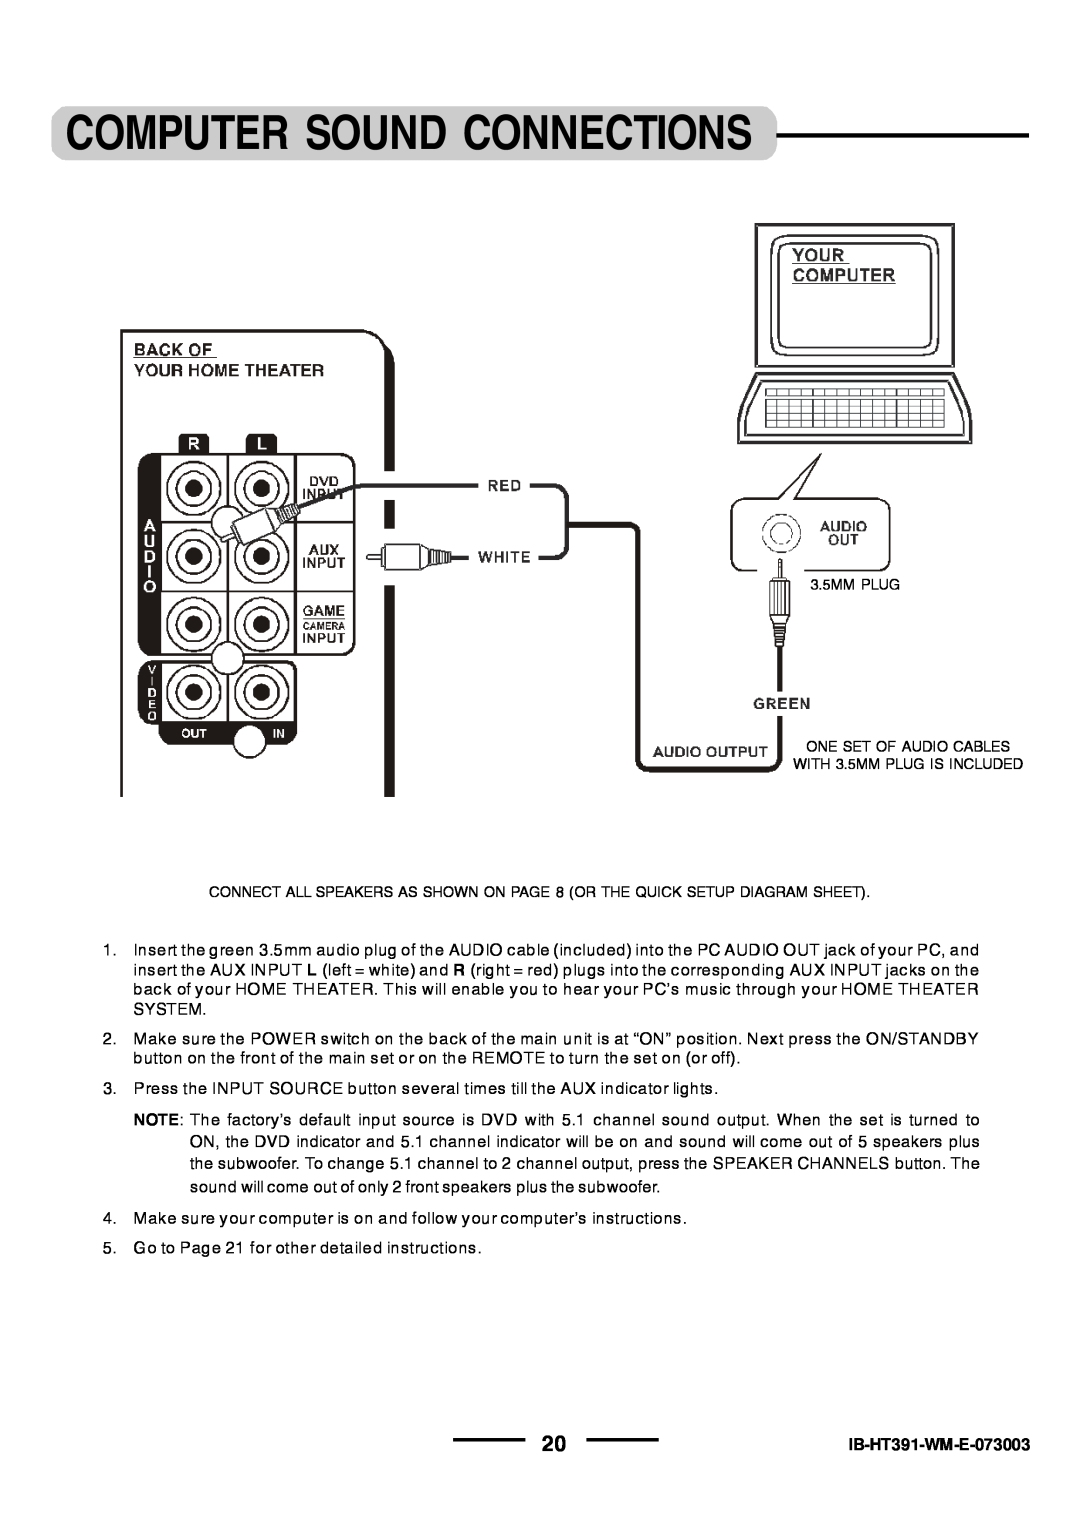 Lenoxx Electronics HT-391 manual Computer Sound Connections, IB-HT391-WM-E-073003 